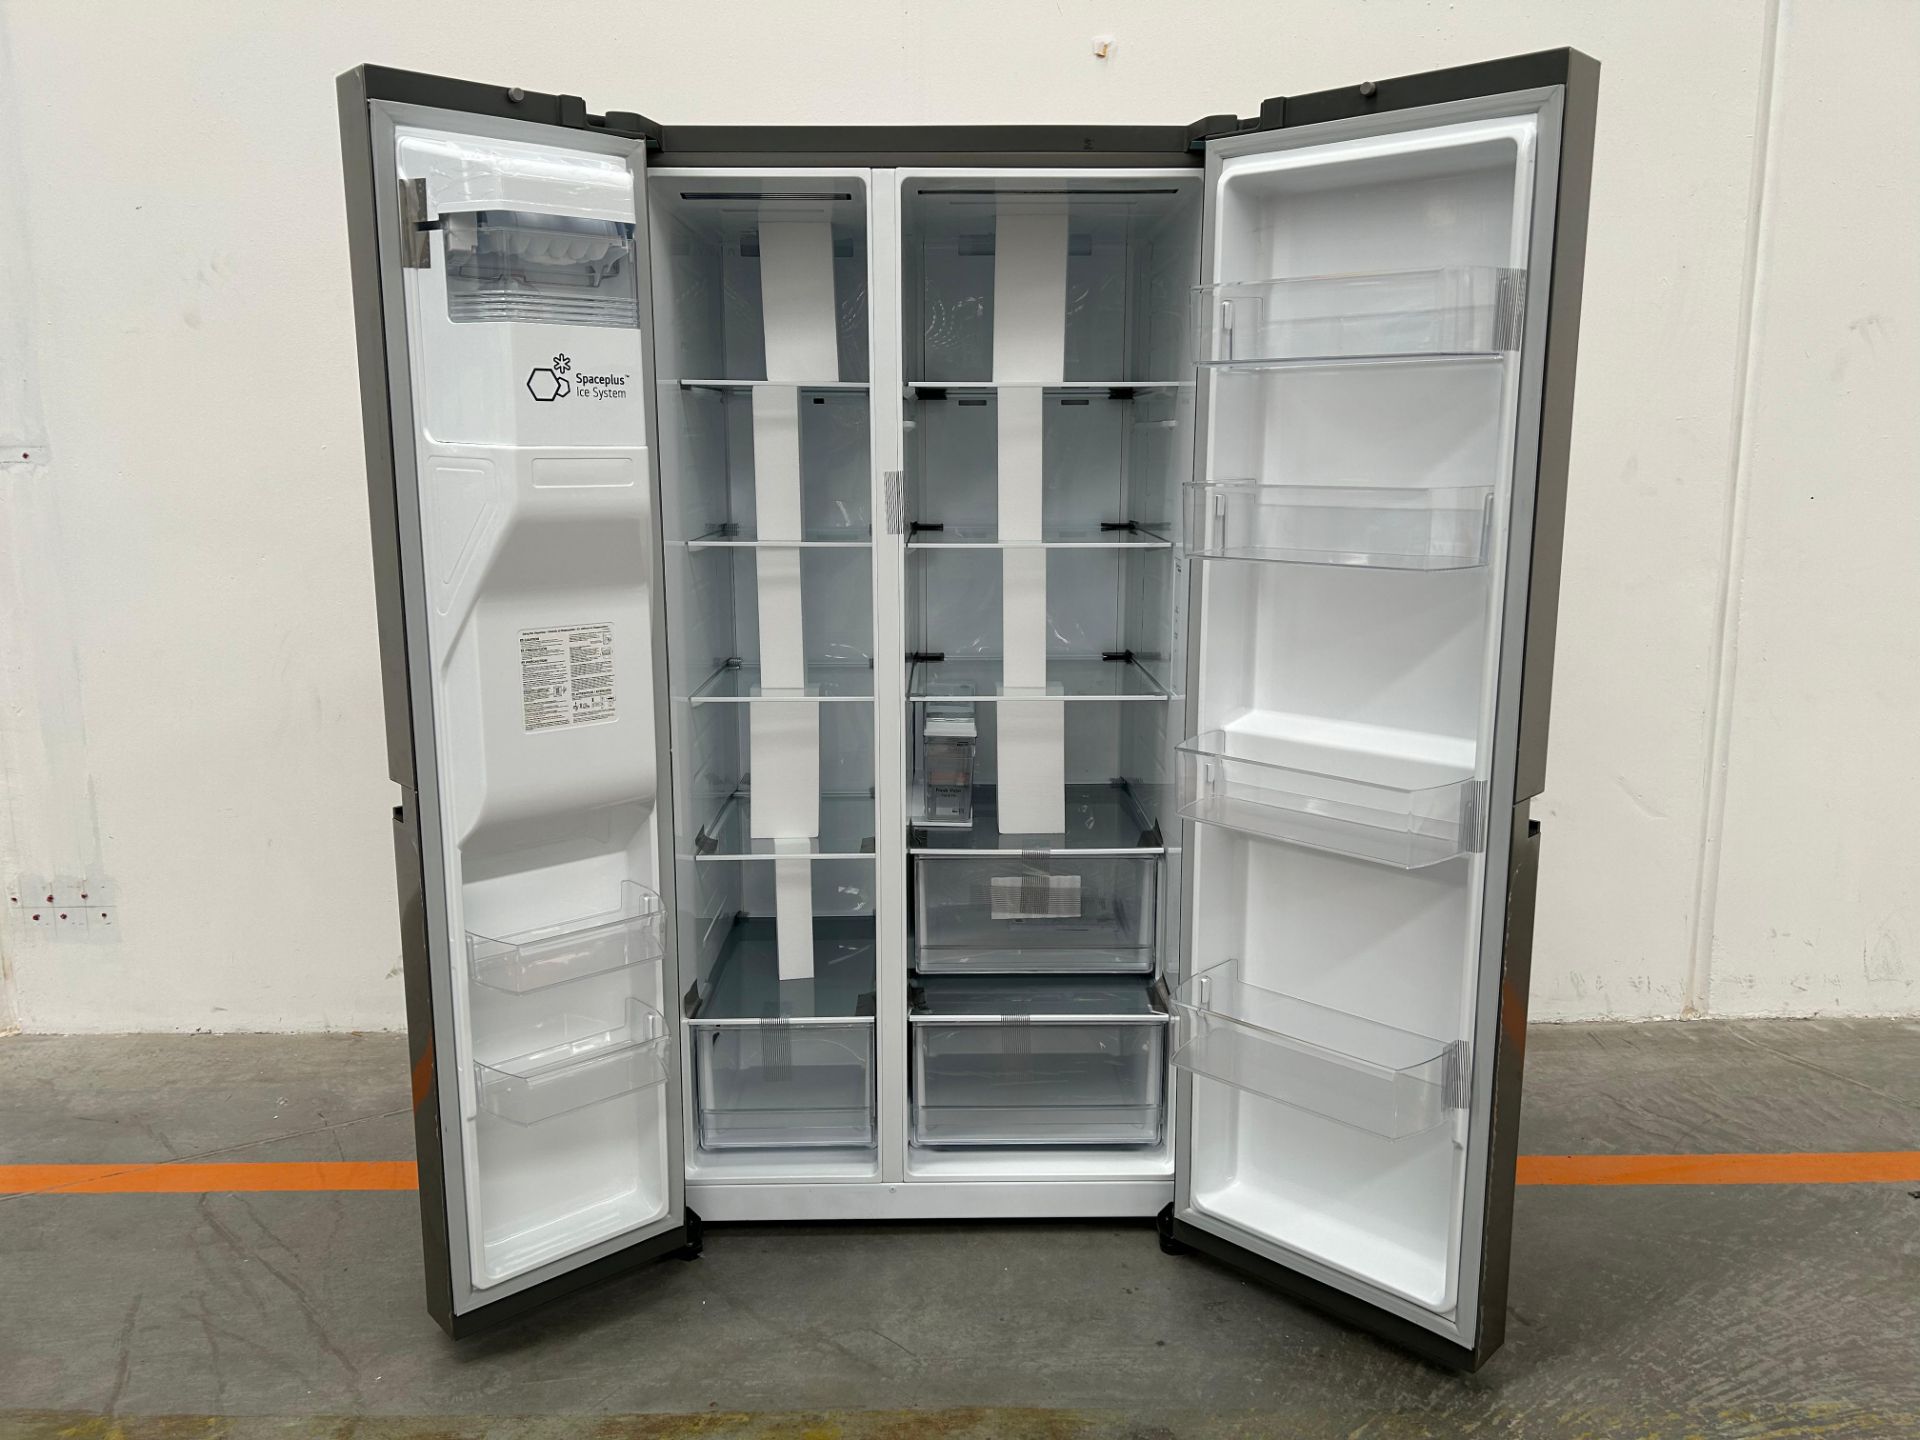 (NUEVO) Refrigerador con dispensador de agua Marca LG, Modelo VS27LNIP, Serie 27526, Color GRIS - Image 4 of 8